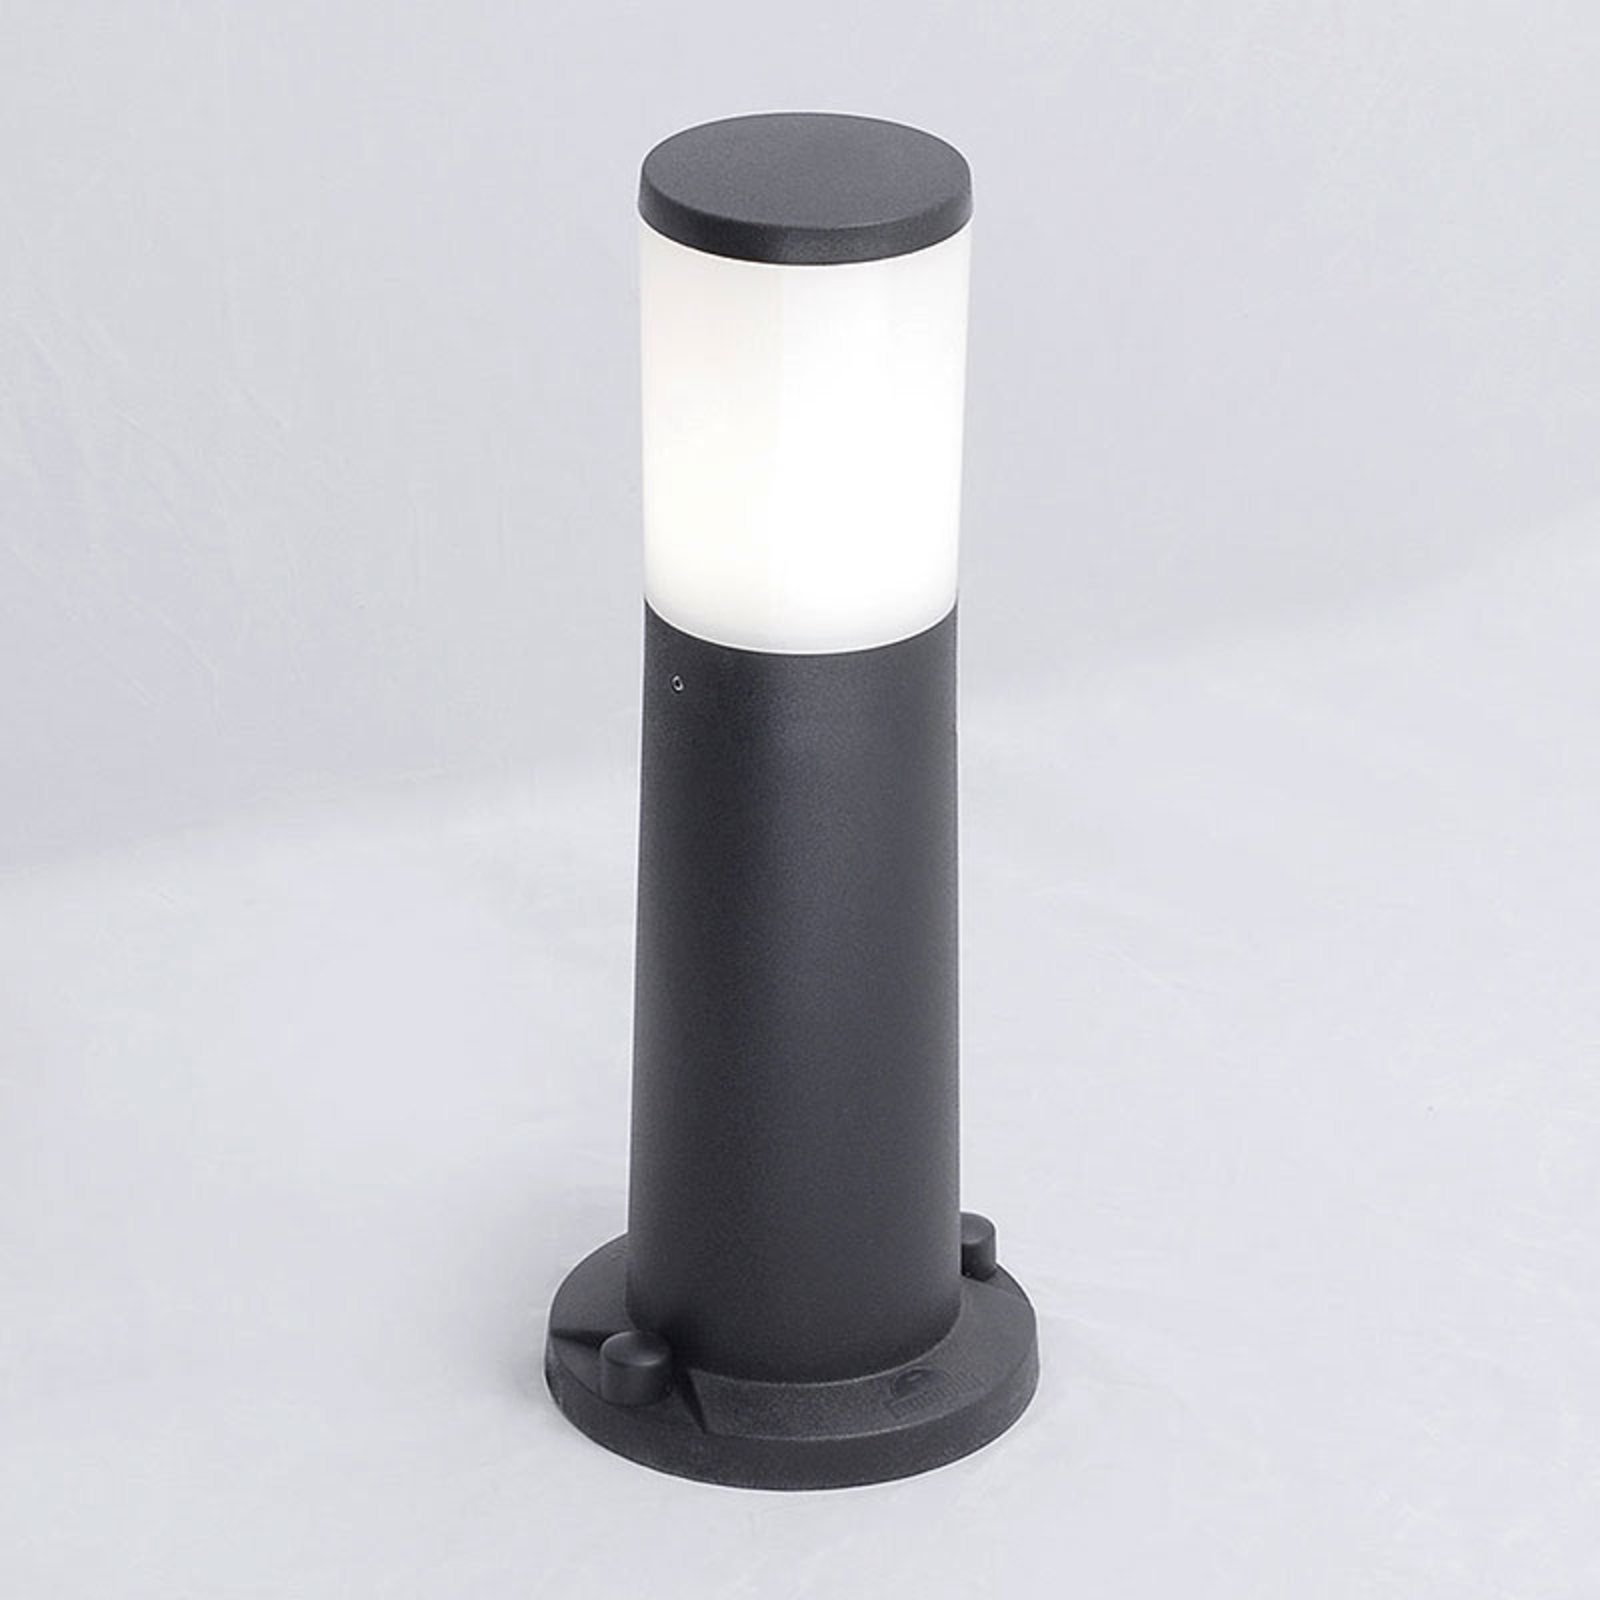 Amelia LED lampa s podstavcom, CCT, čierna, výška 40 cm